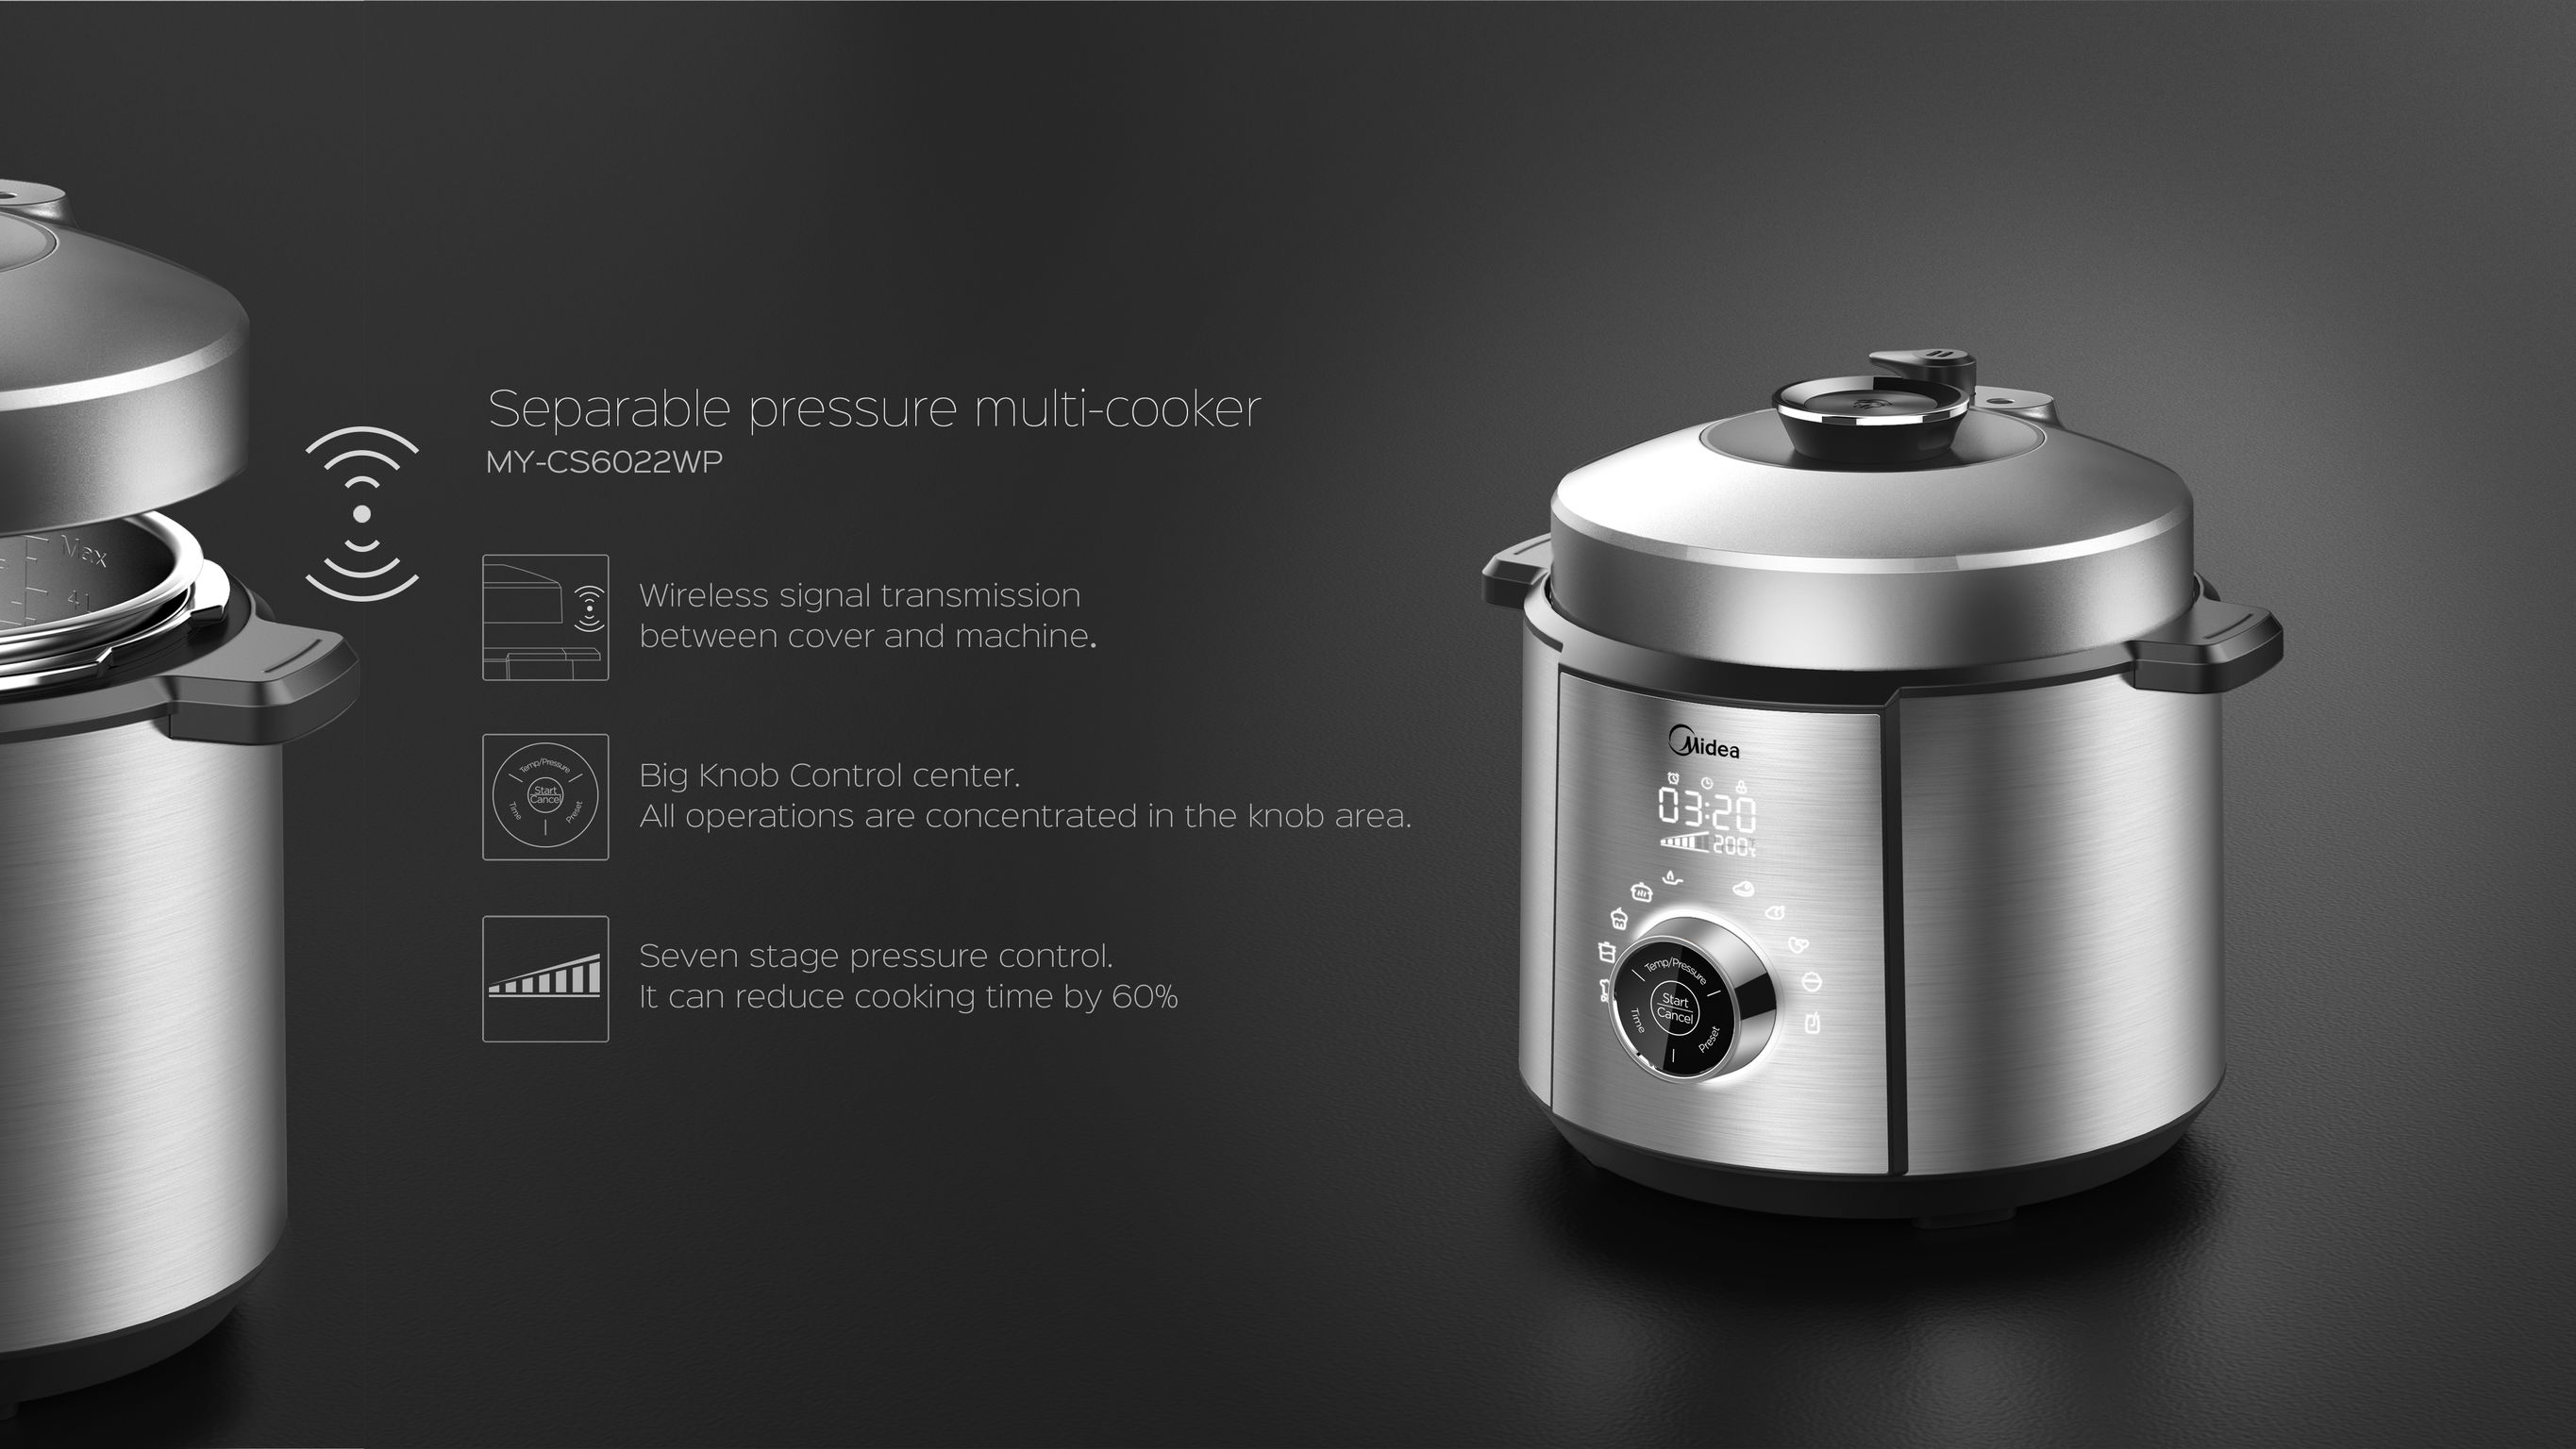 Separable pressure multi-cooker